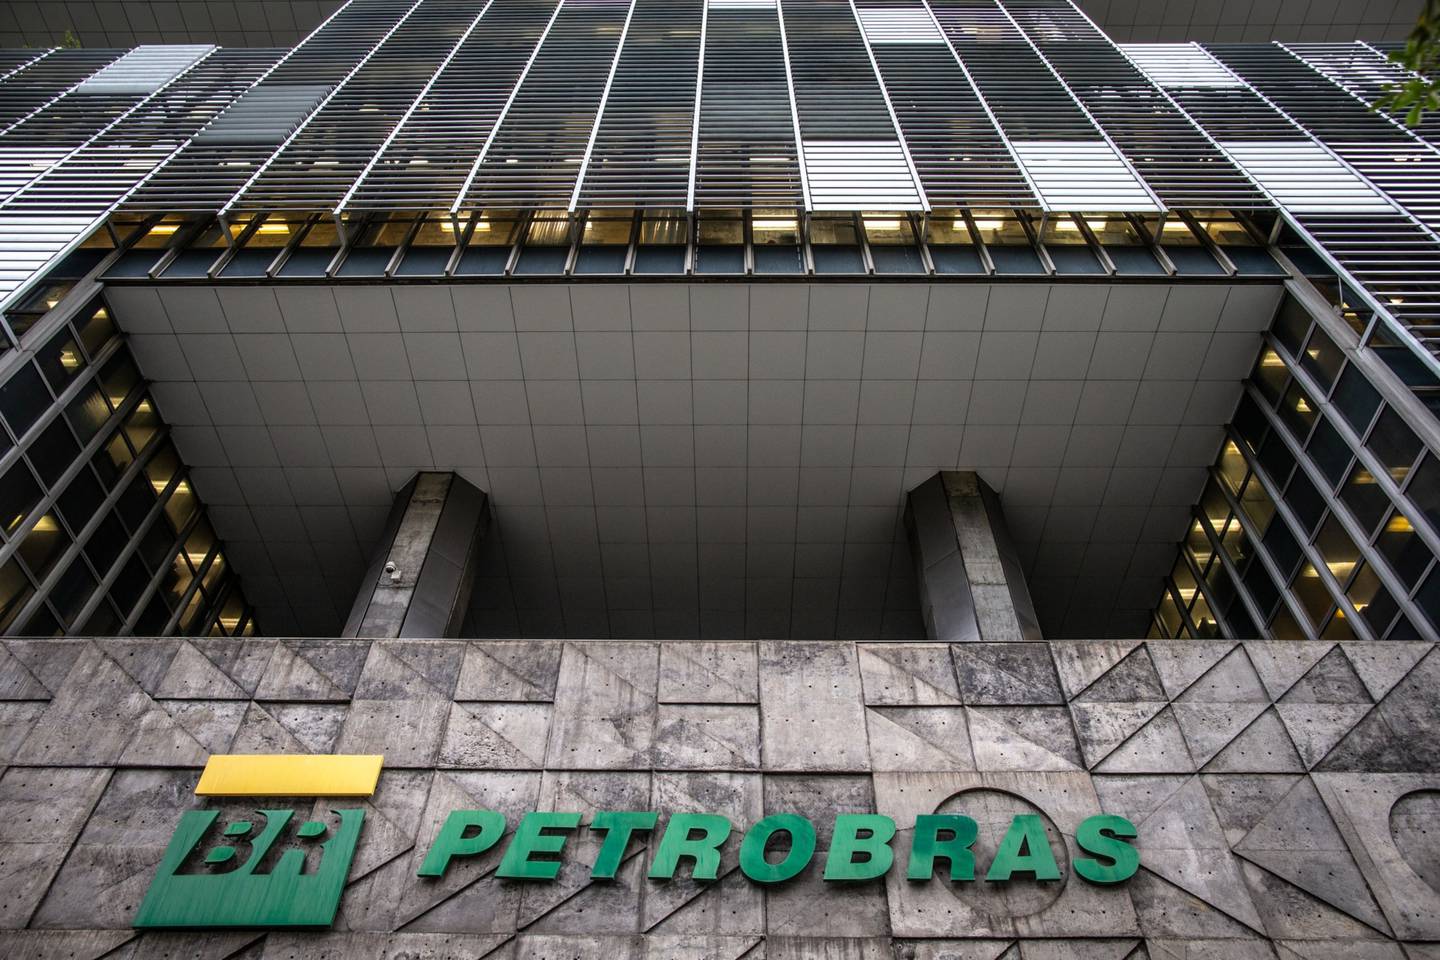 Petrobrasdfd